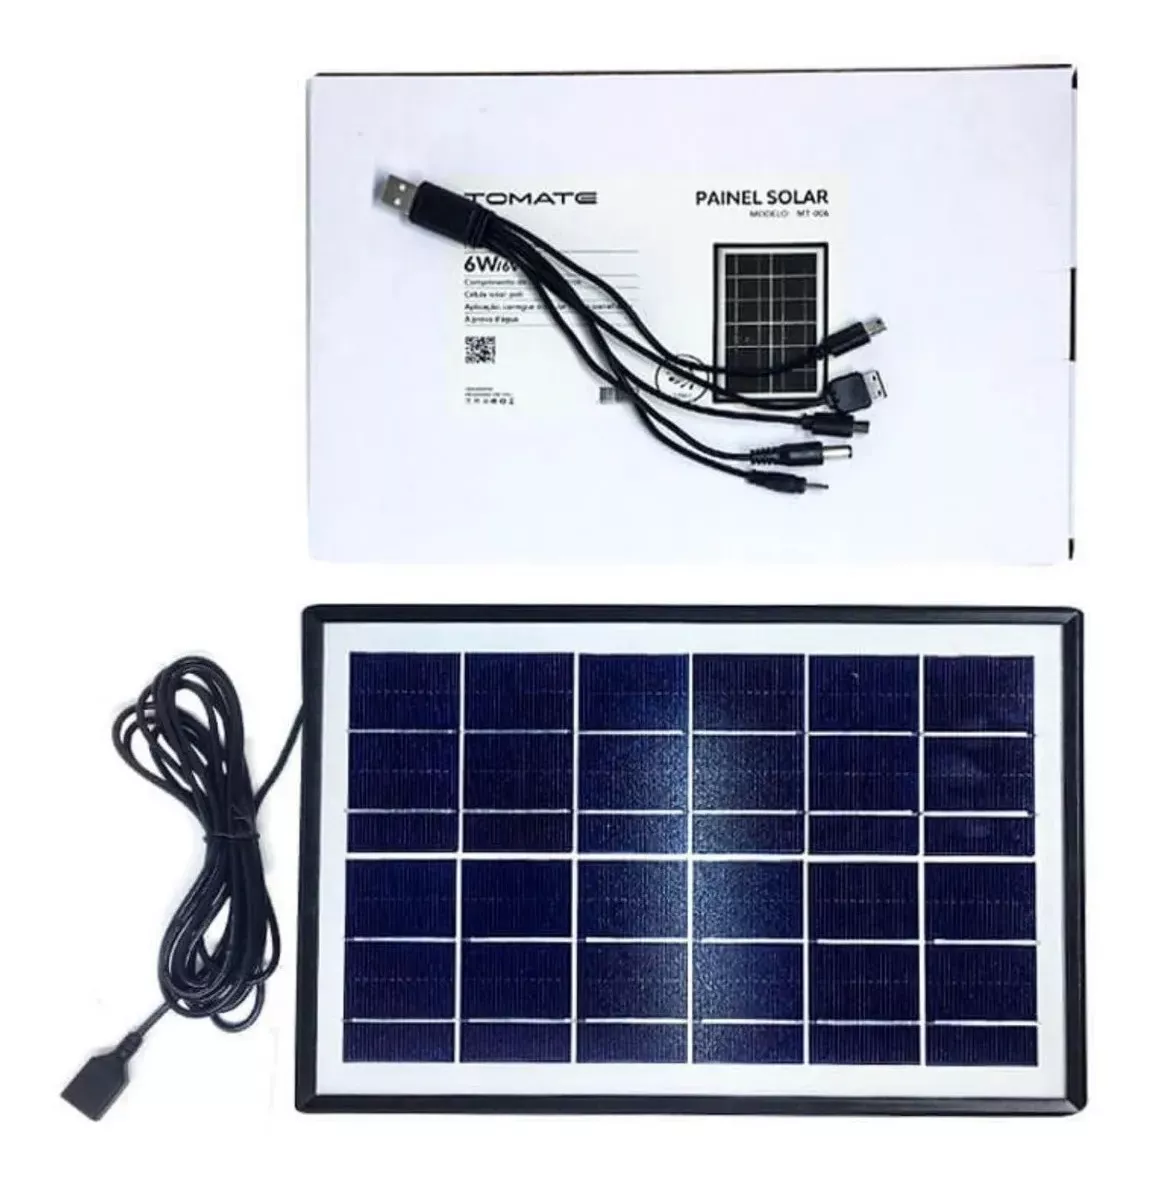 Painel Solar Carrega Celular Placa Portátil Usb 6w 